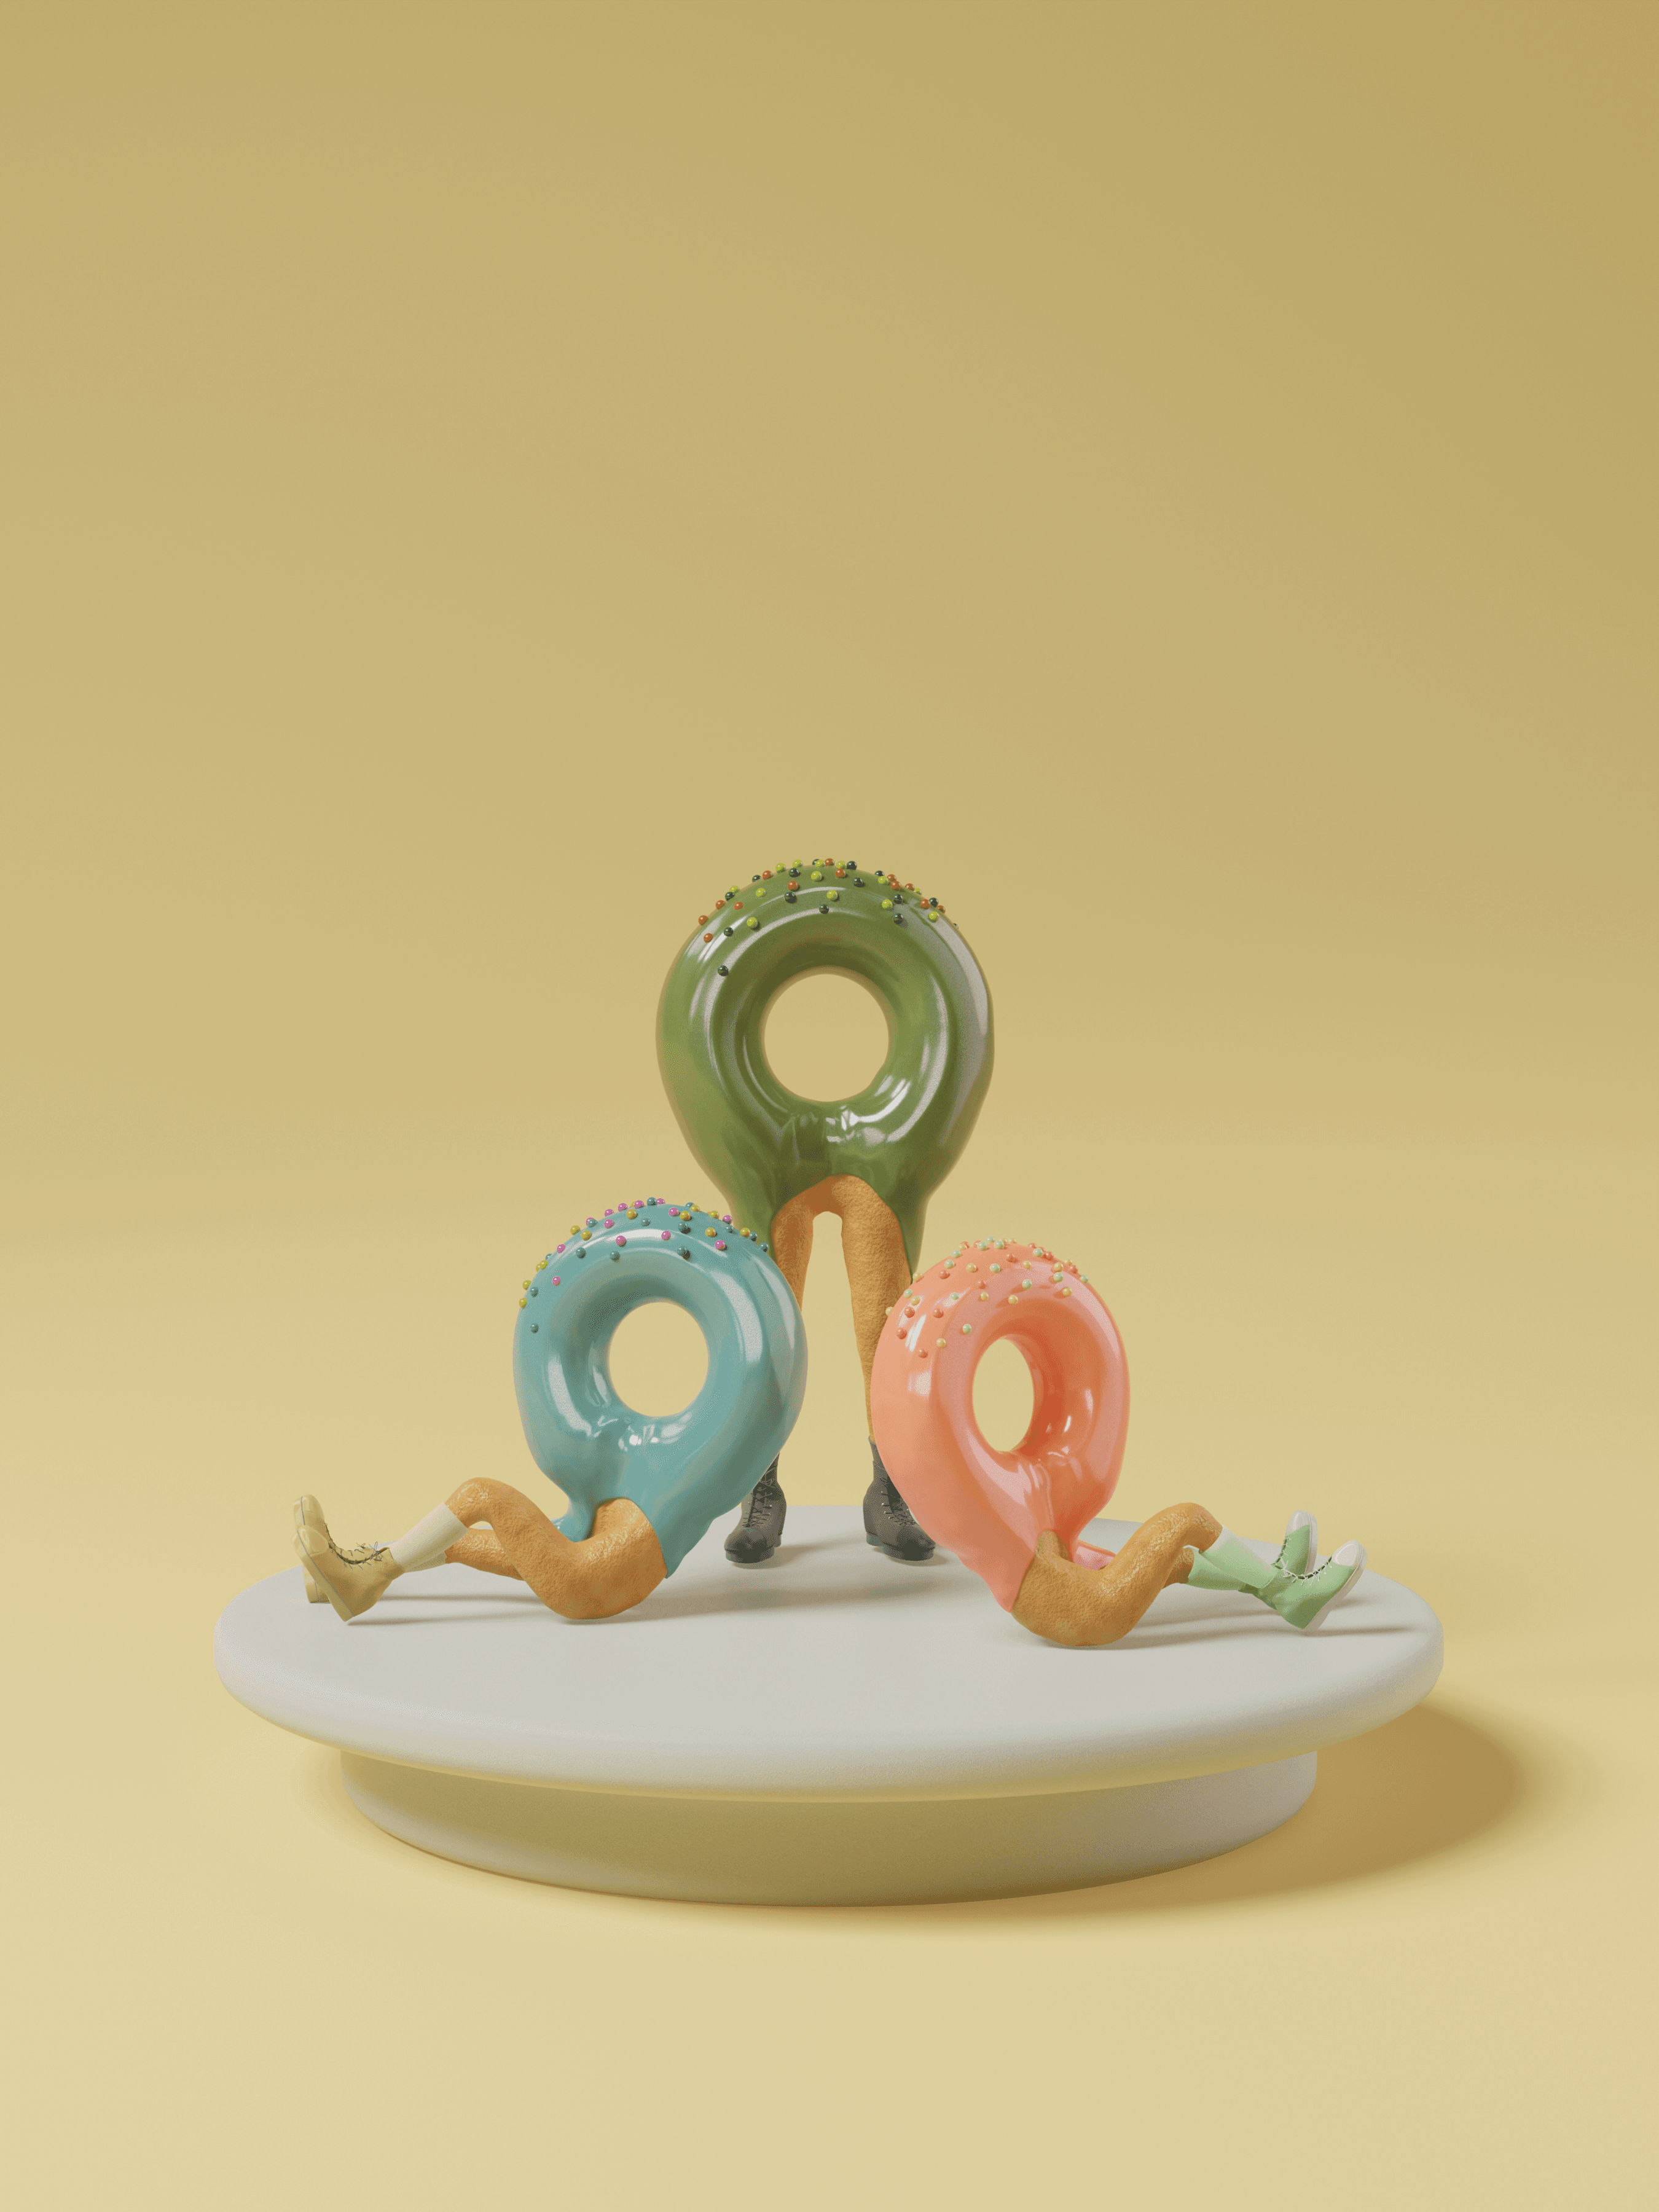 #6-4 Three donut brothers